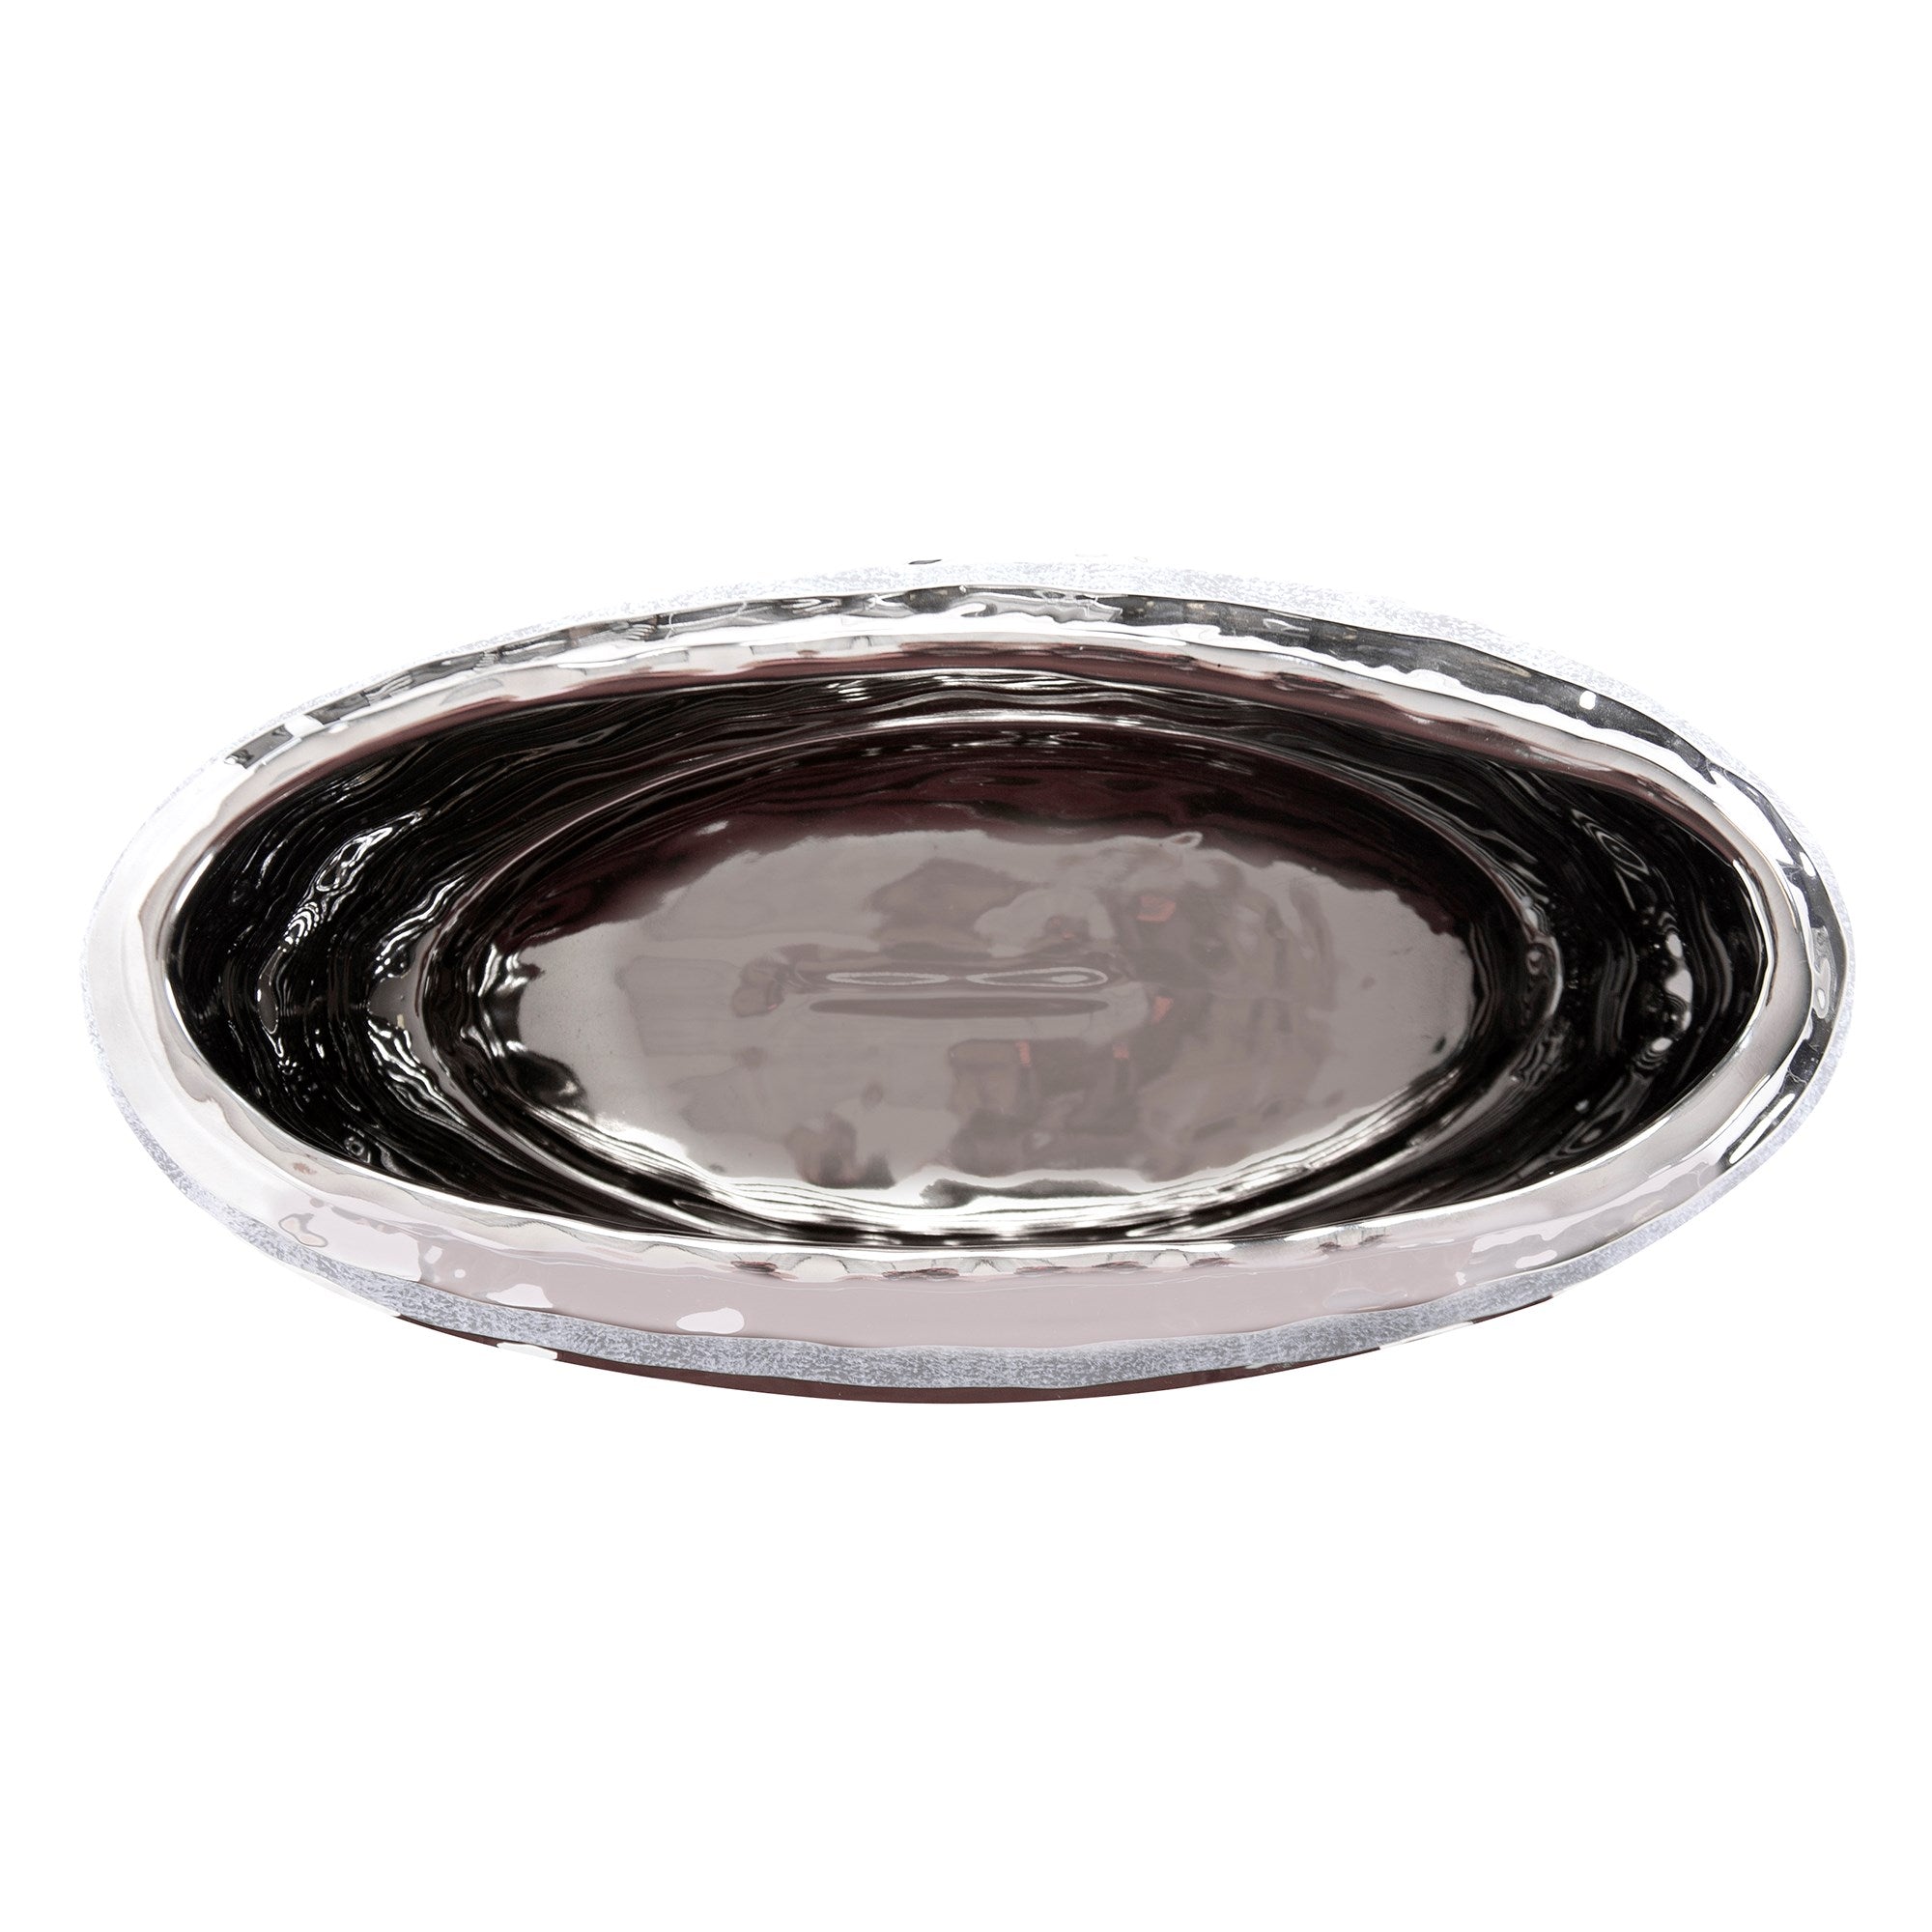 Two-tone Spiral Ceramic Bowl